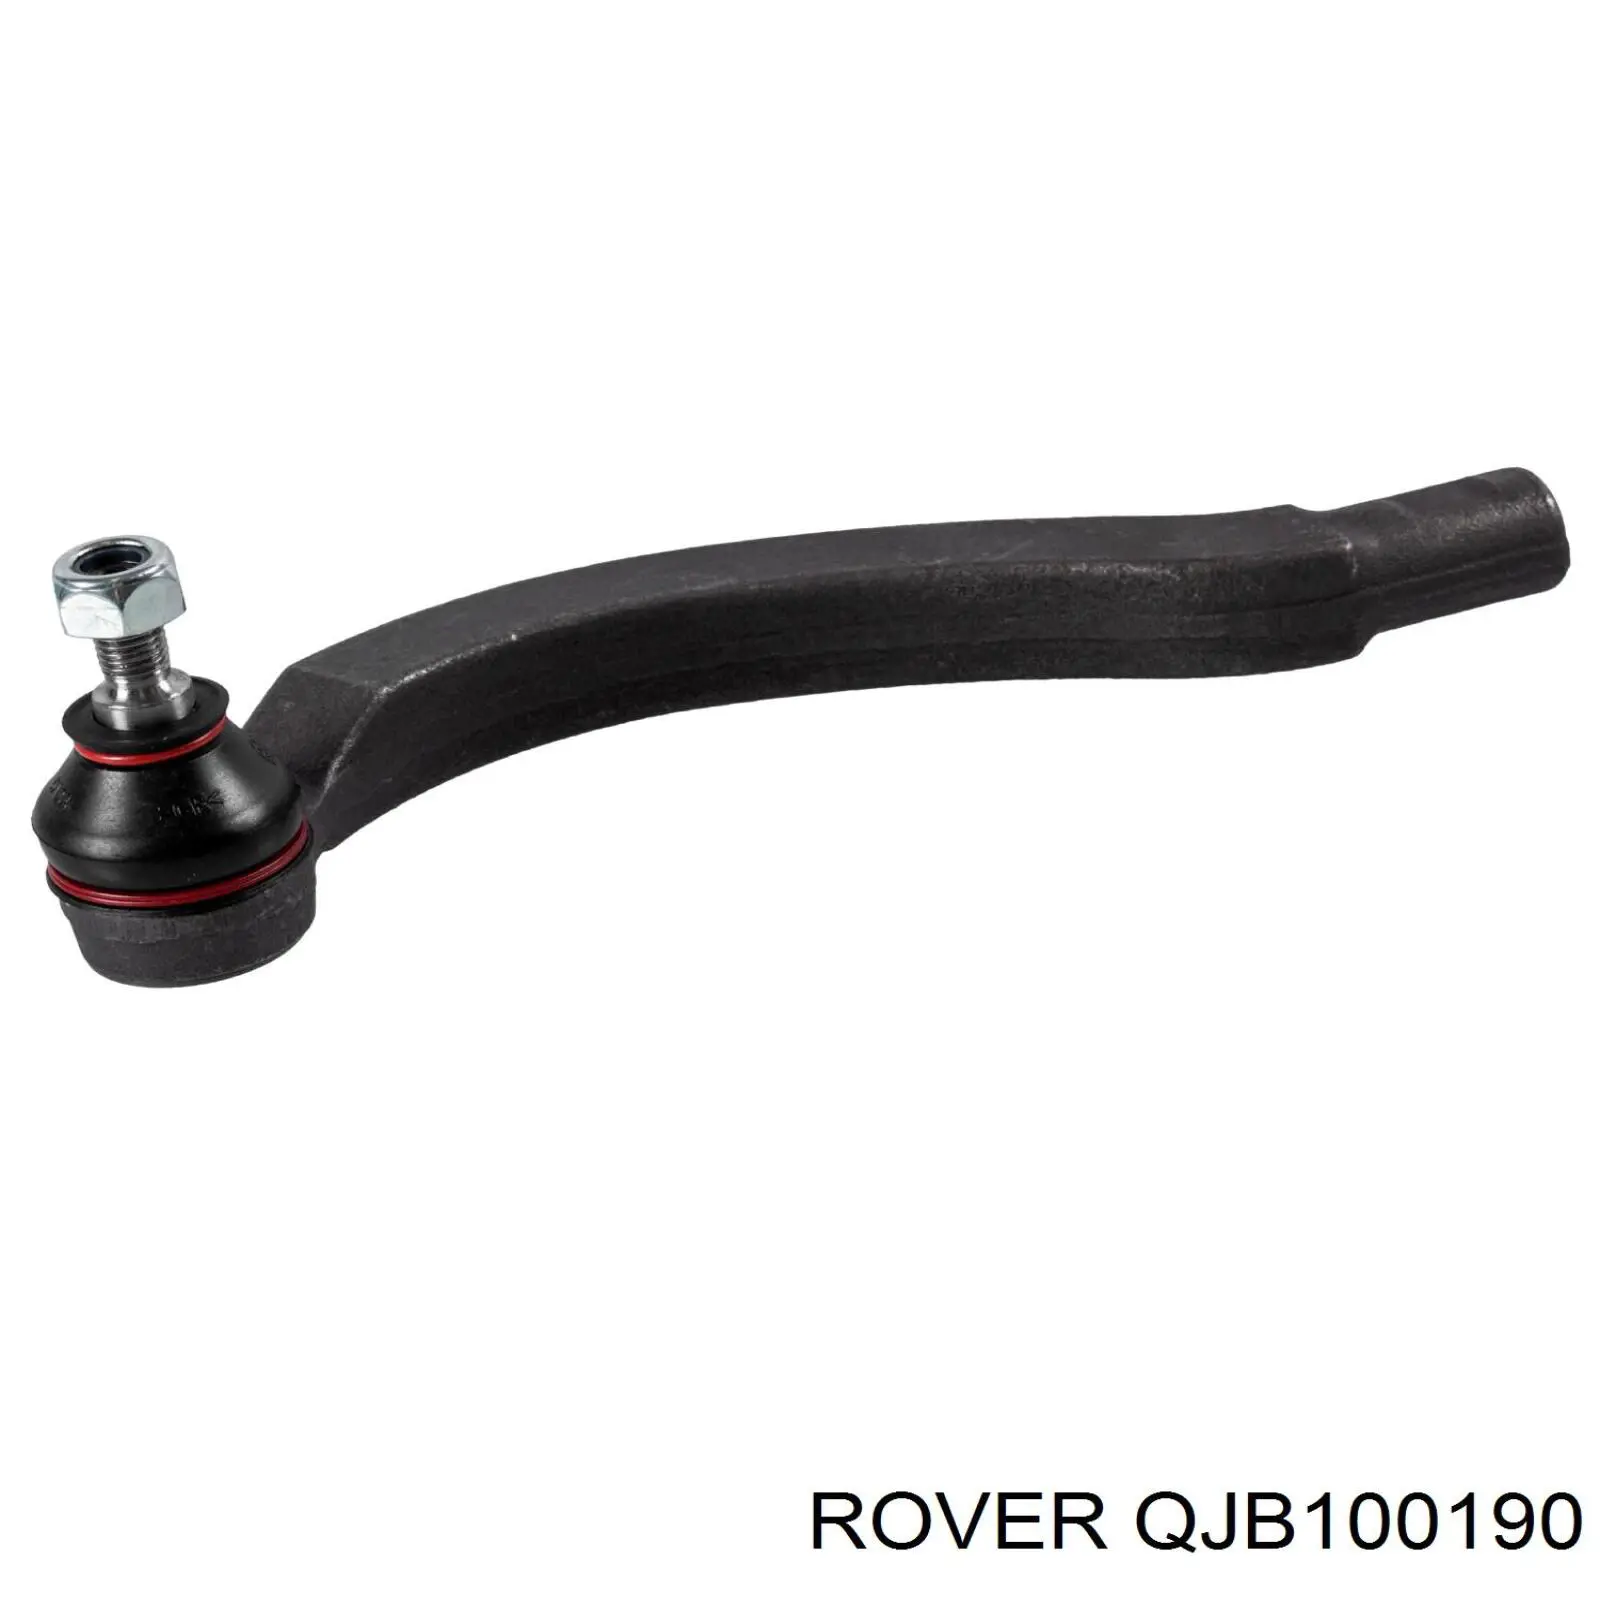 QJB100190 Rover rótula barra de acoplamiento exterior